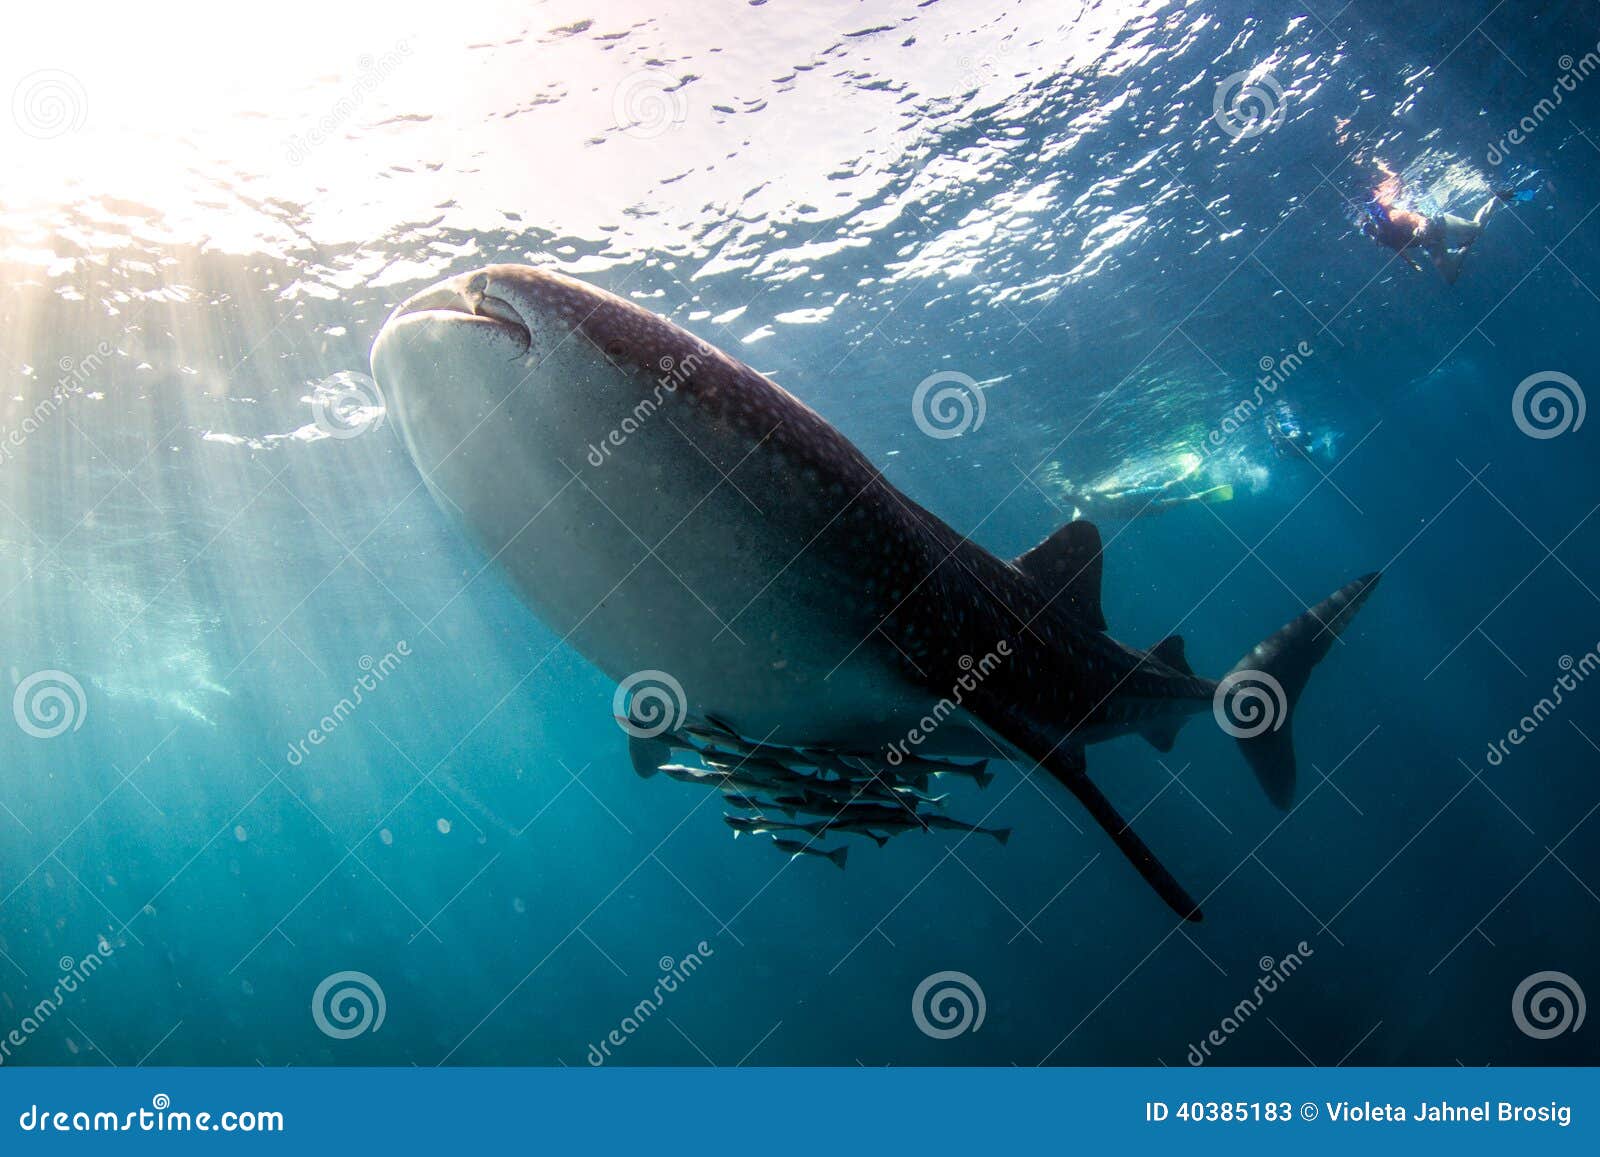 whale shark blue water